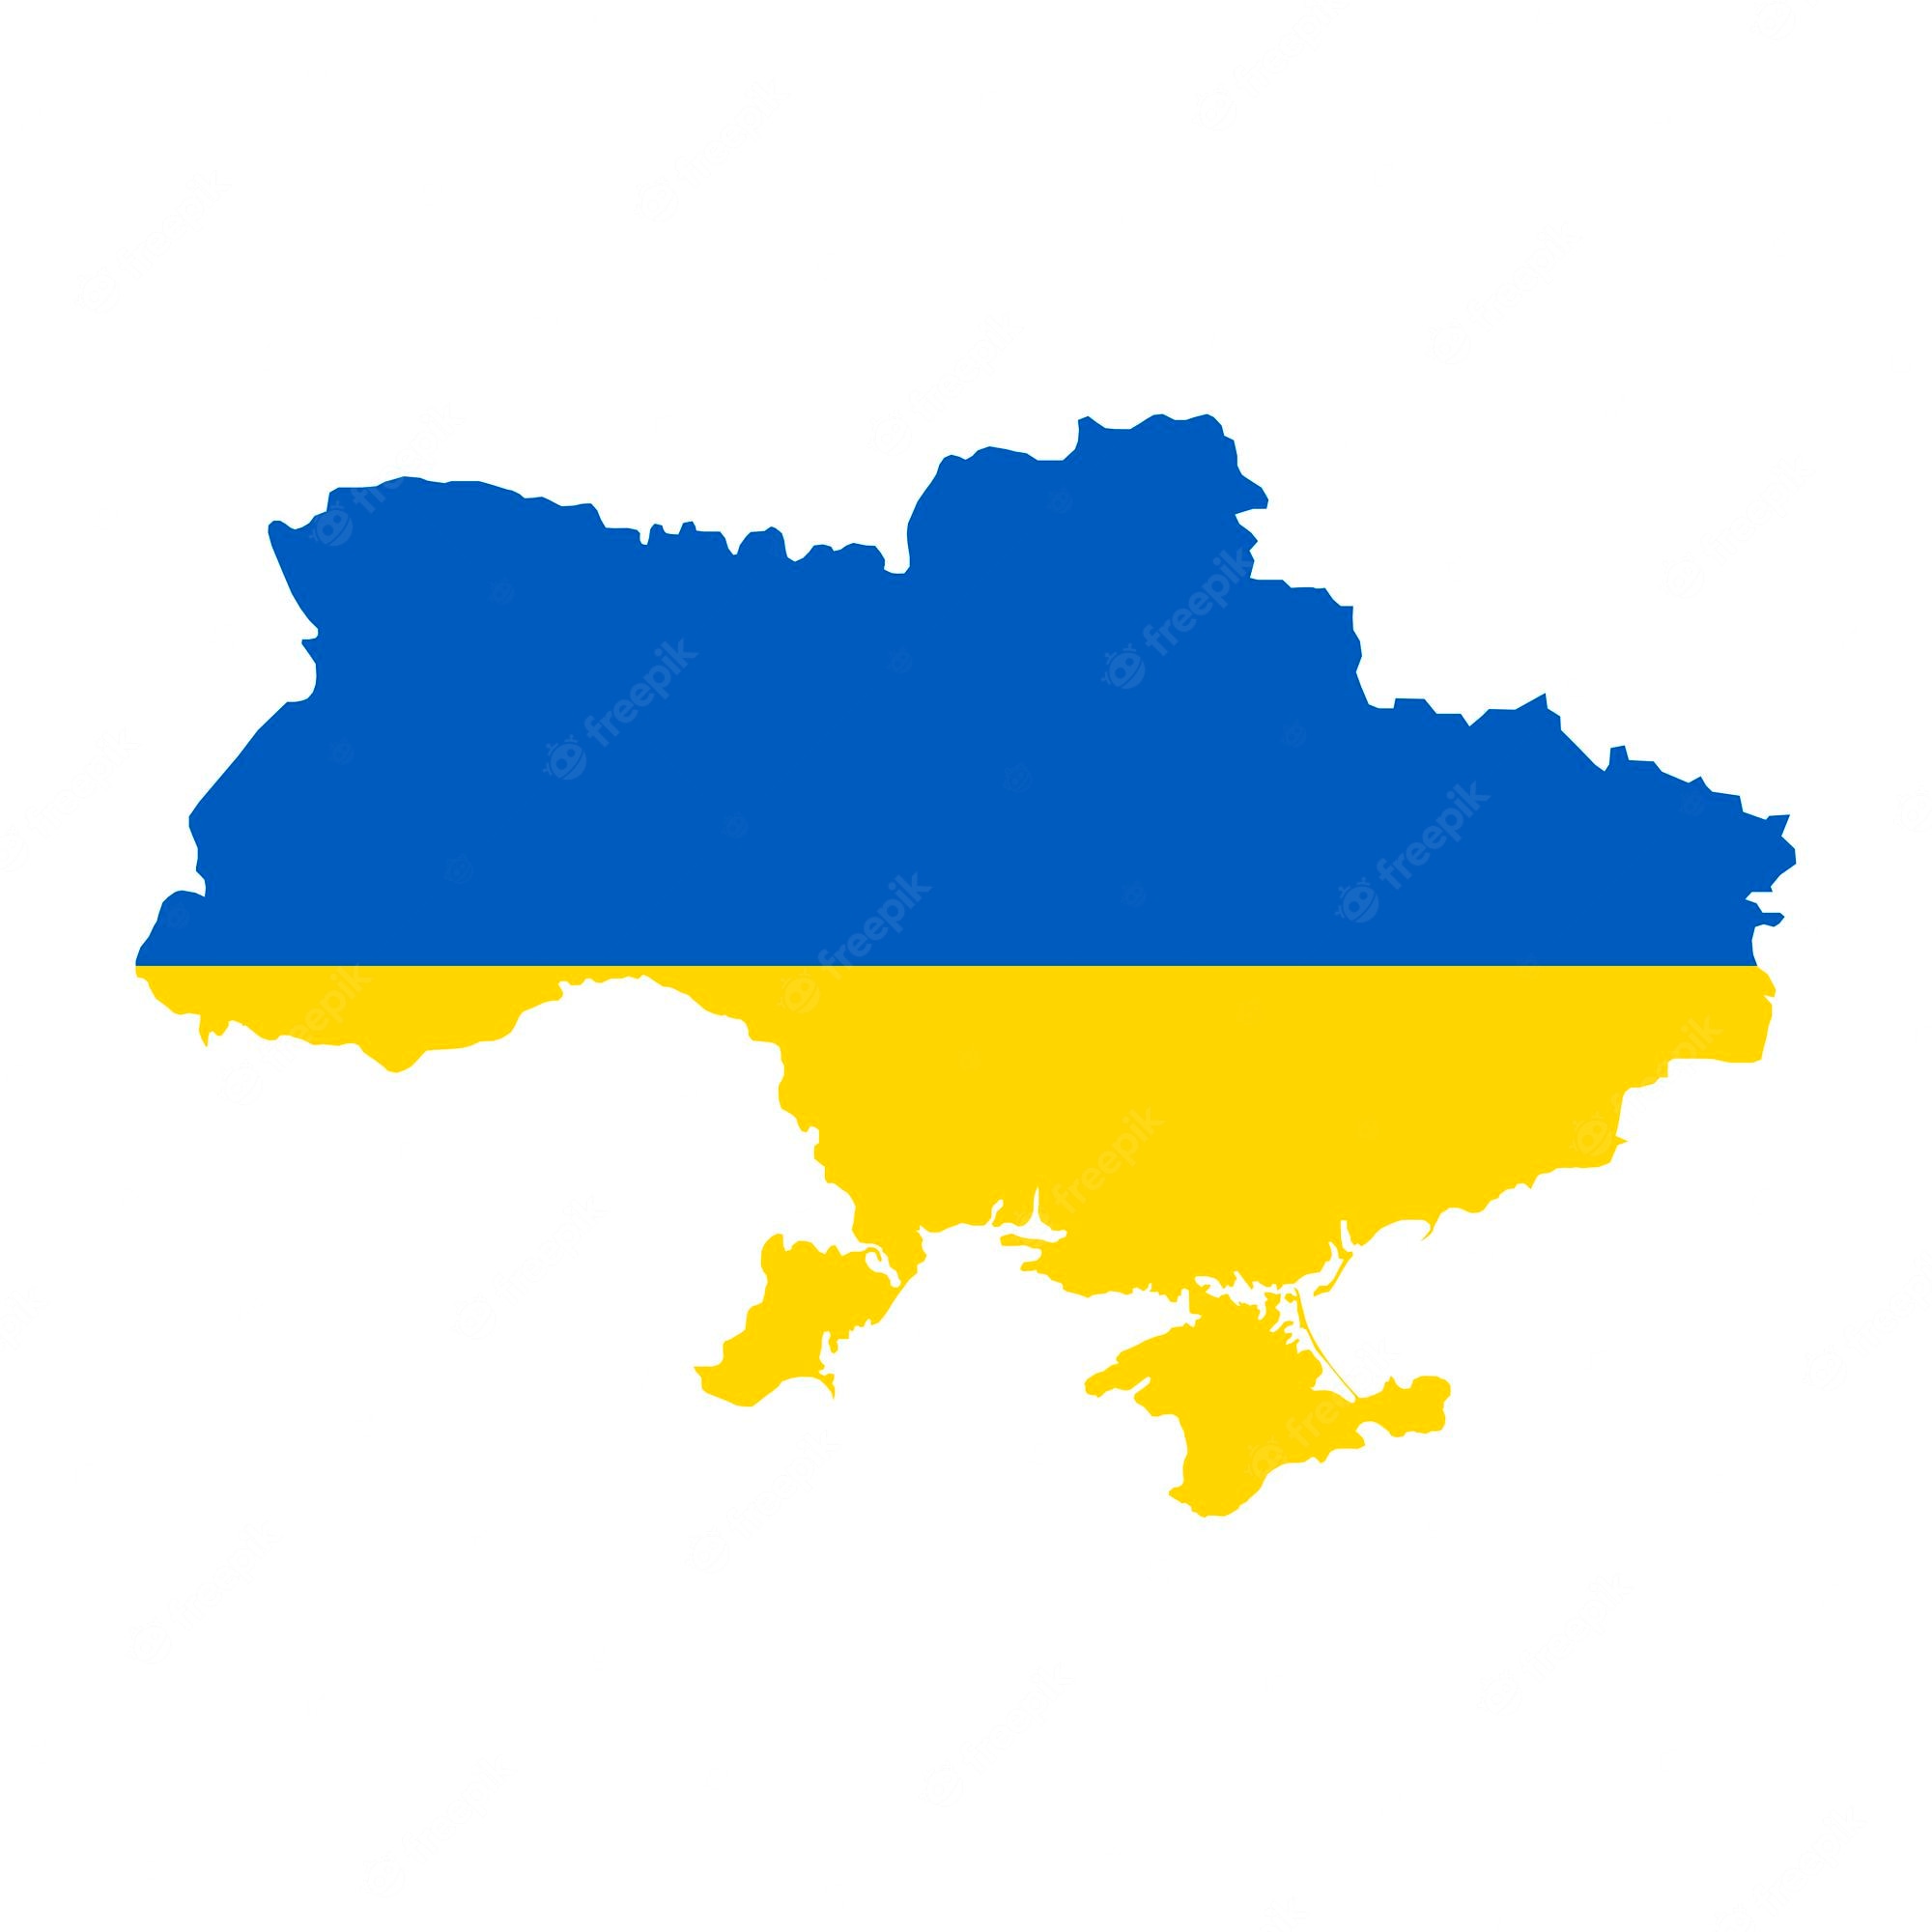 Ukraine map Image. Free Vectors, & PSD